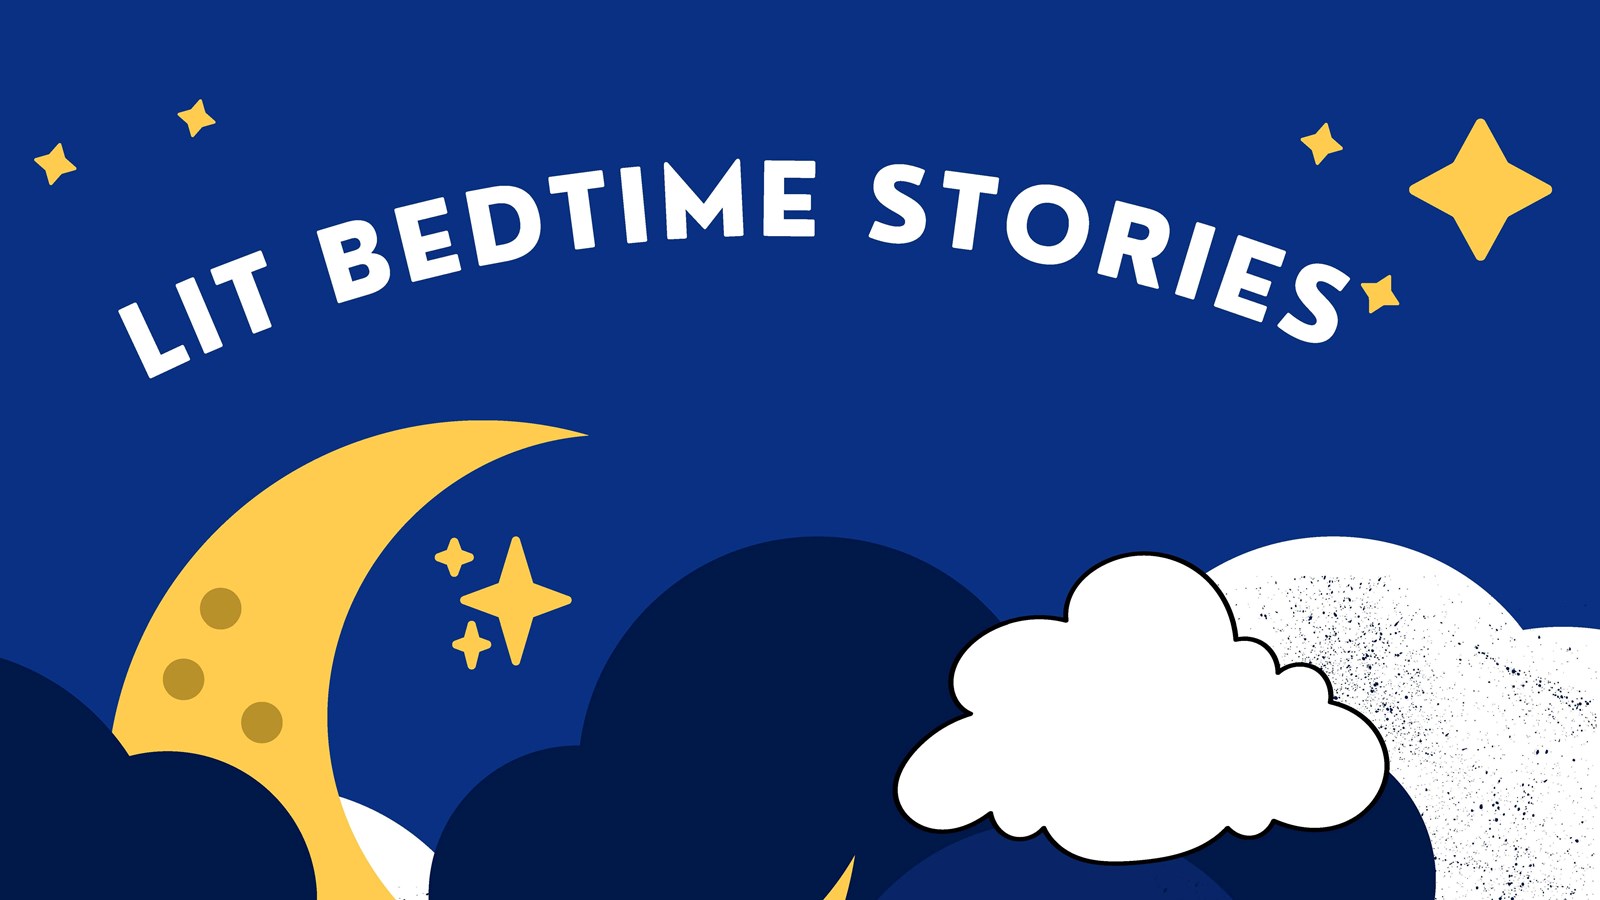 LIT Bedtime Stories